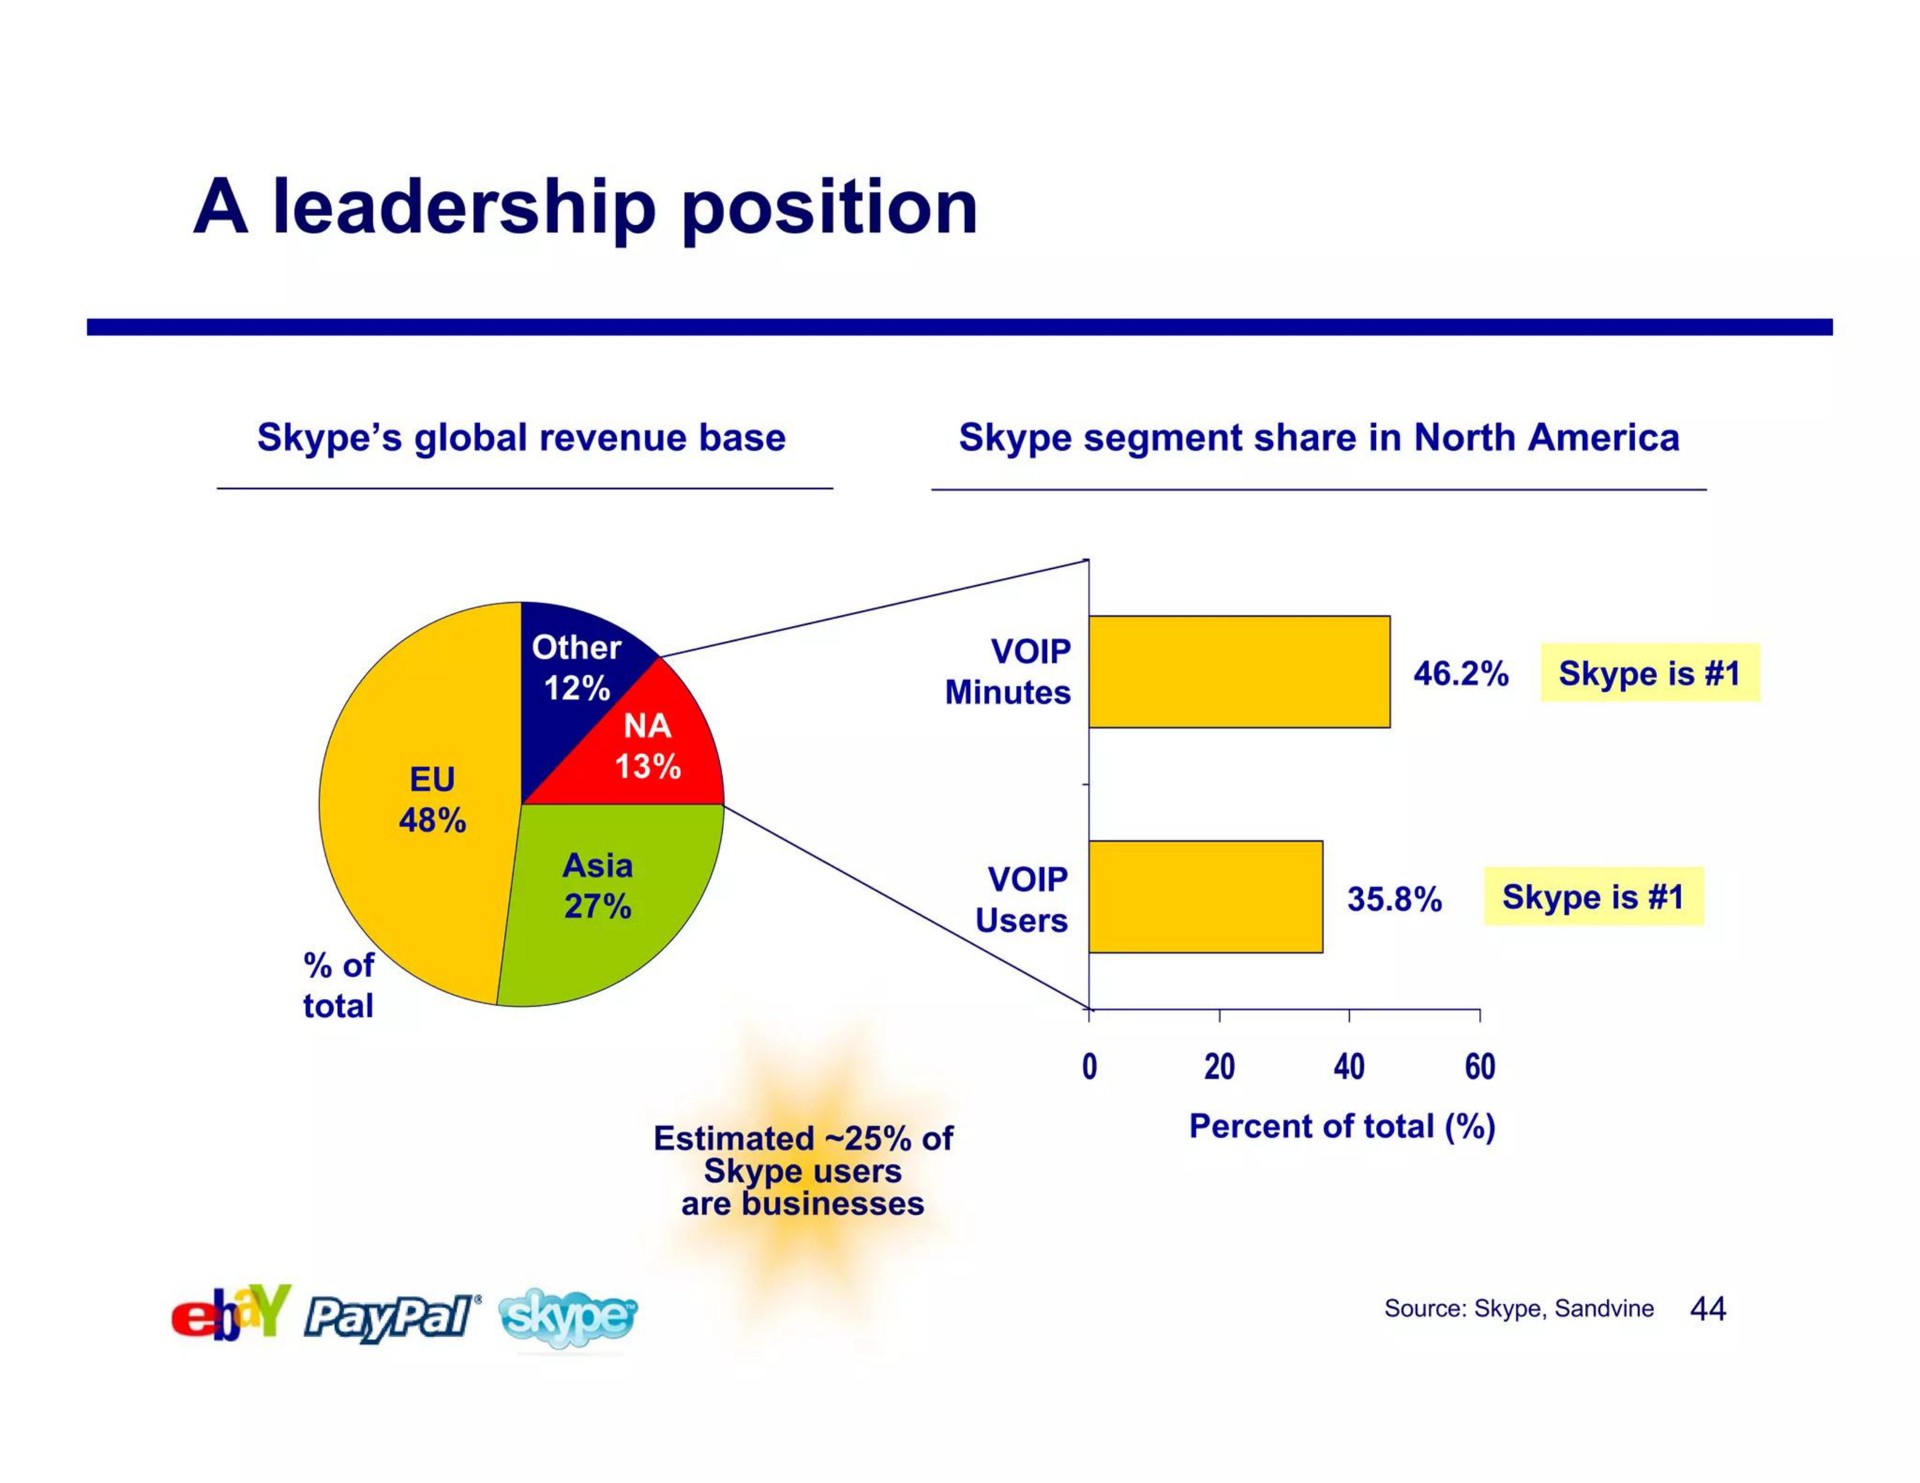 a leadership position | eBay